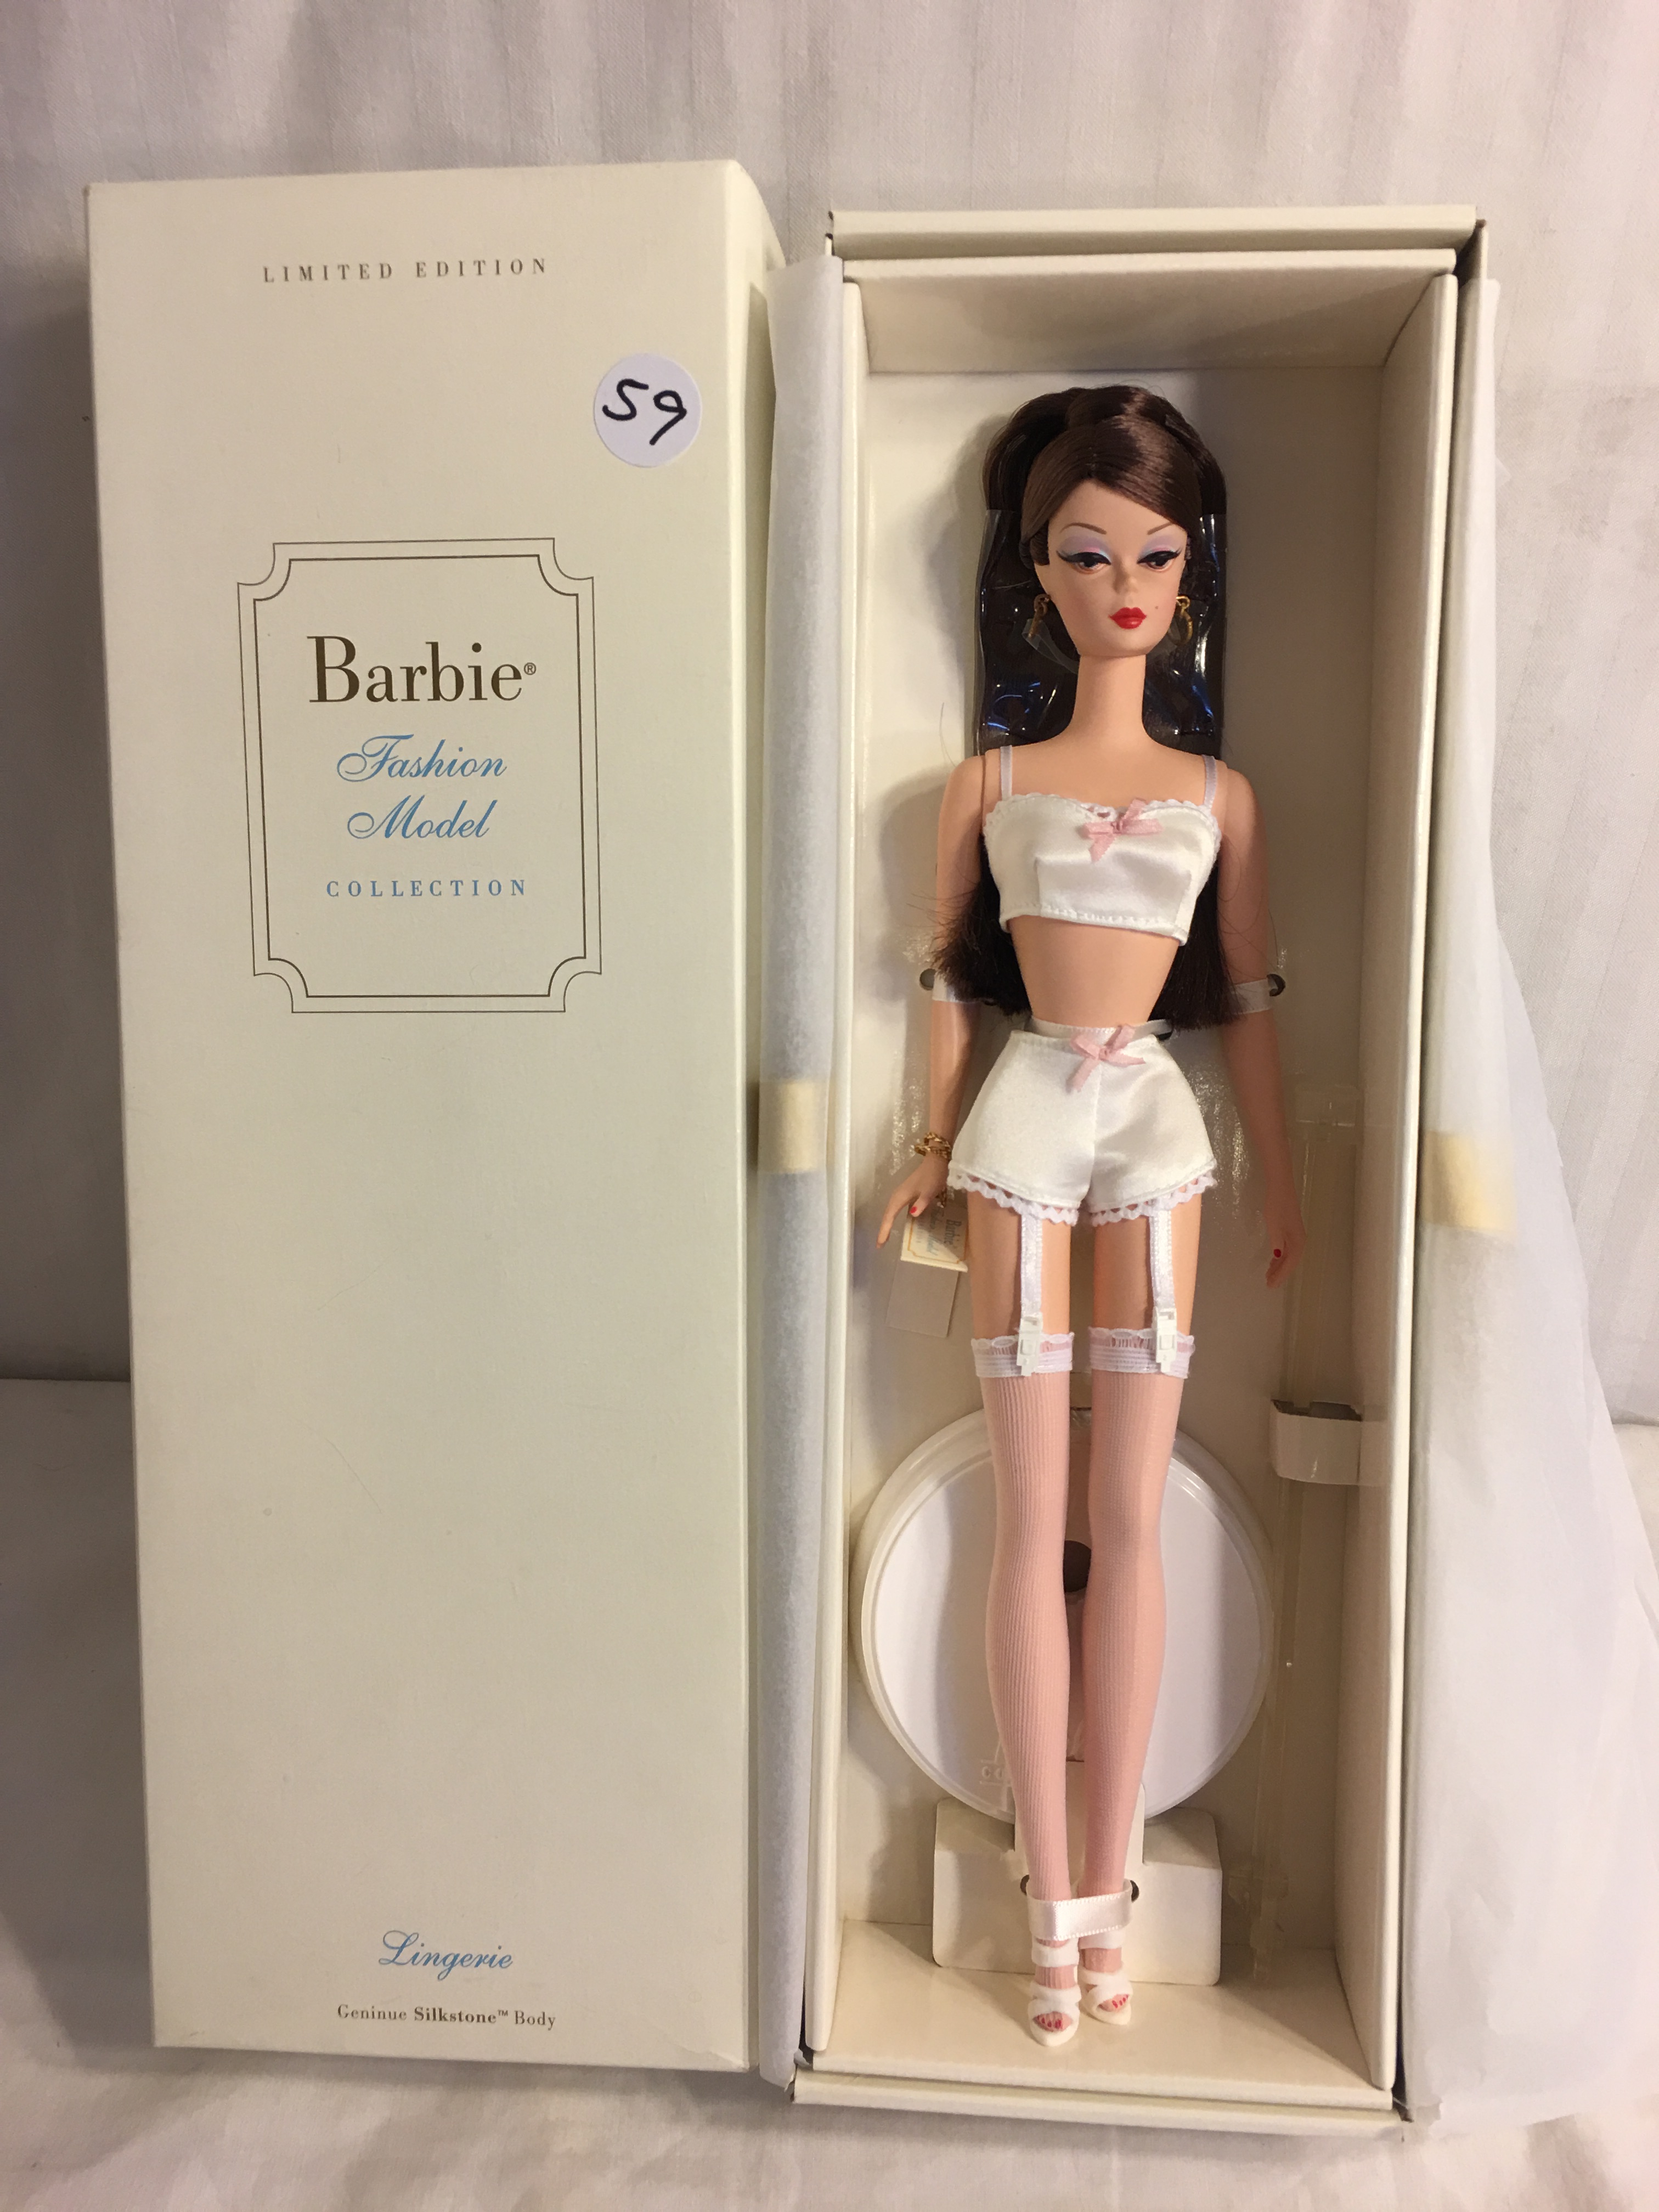 Sold at Auction: Mattel Lingerie Barbie Doll